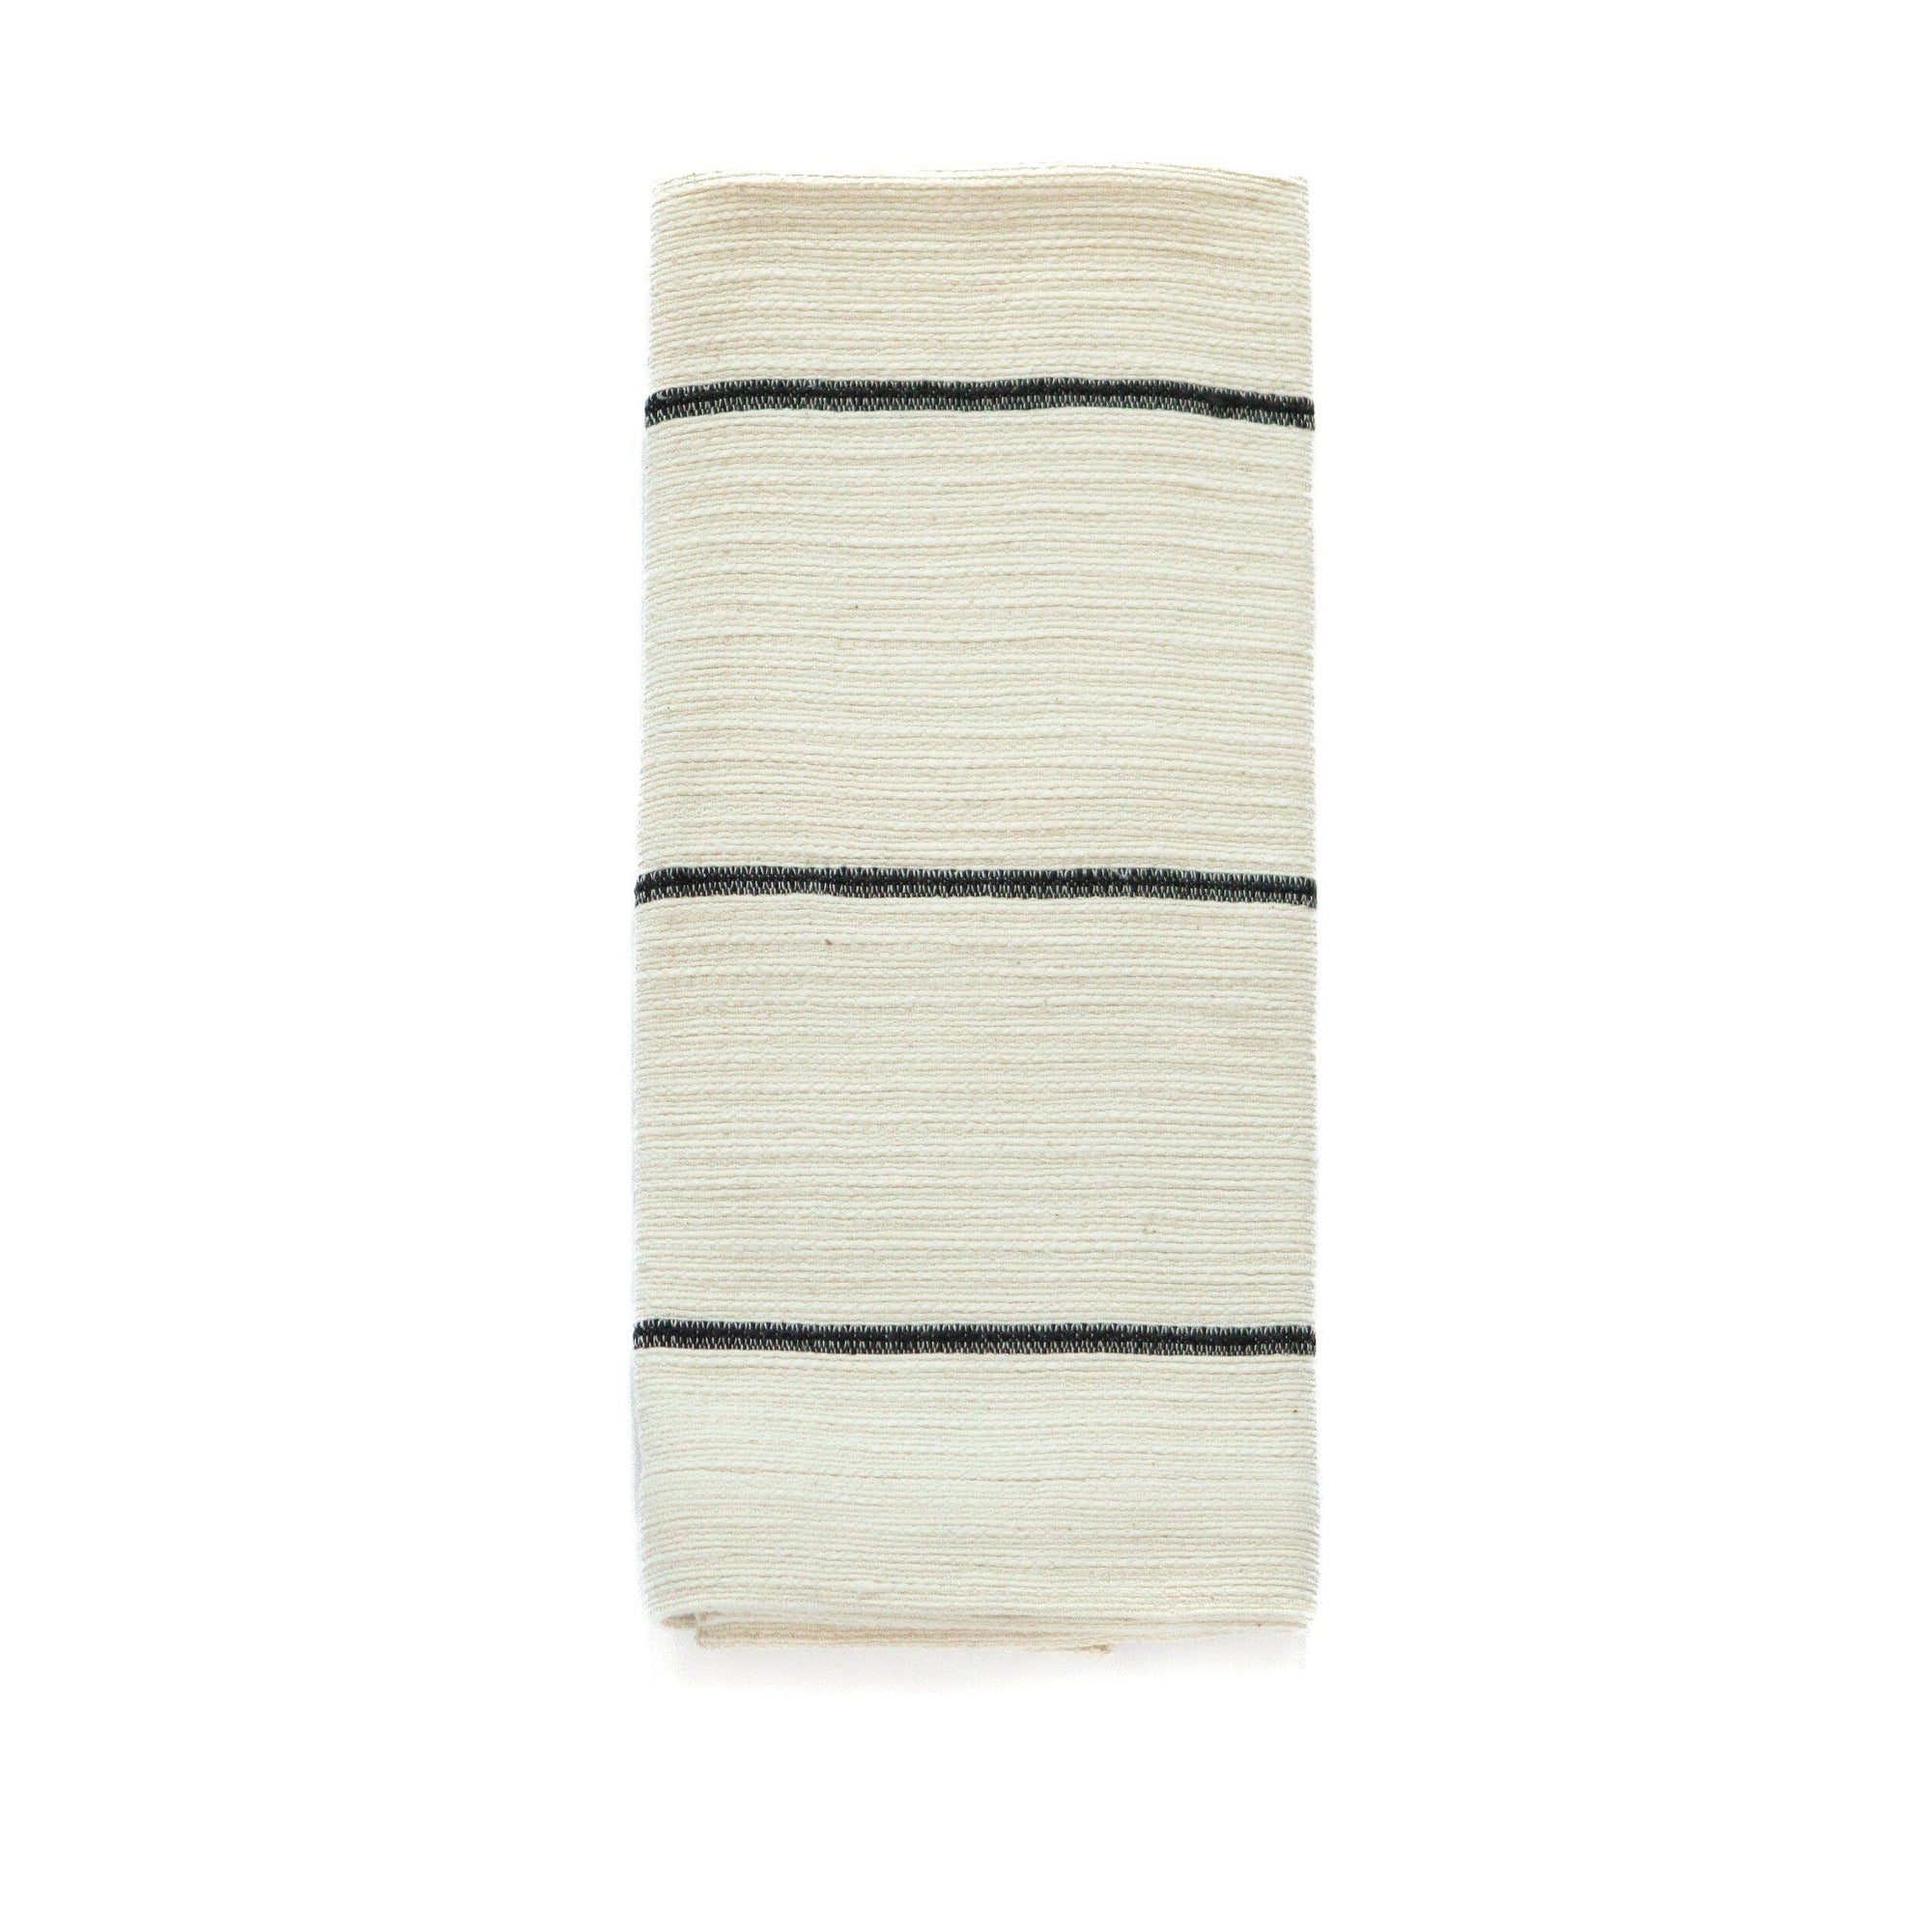 Wari handwoven Ethiopian cotton waffle hand towel: Black - The Unoriginal Bathroom Co.